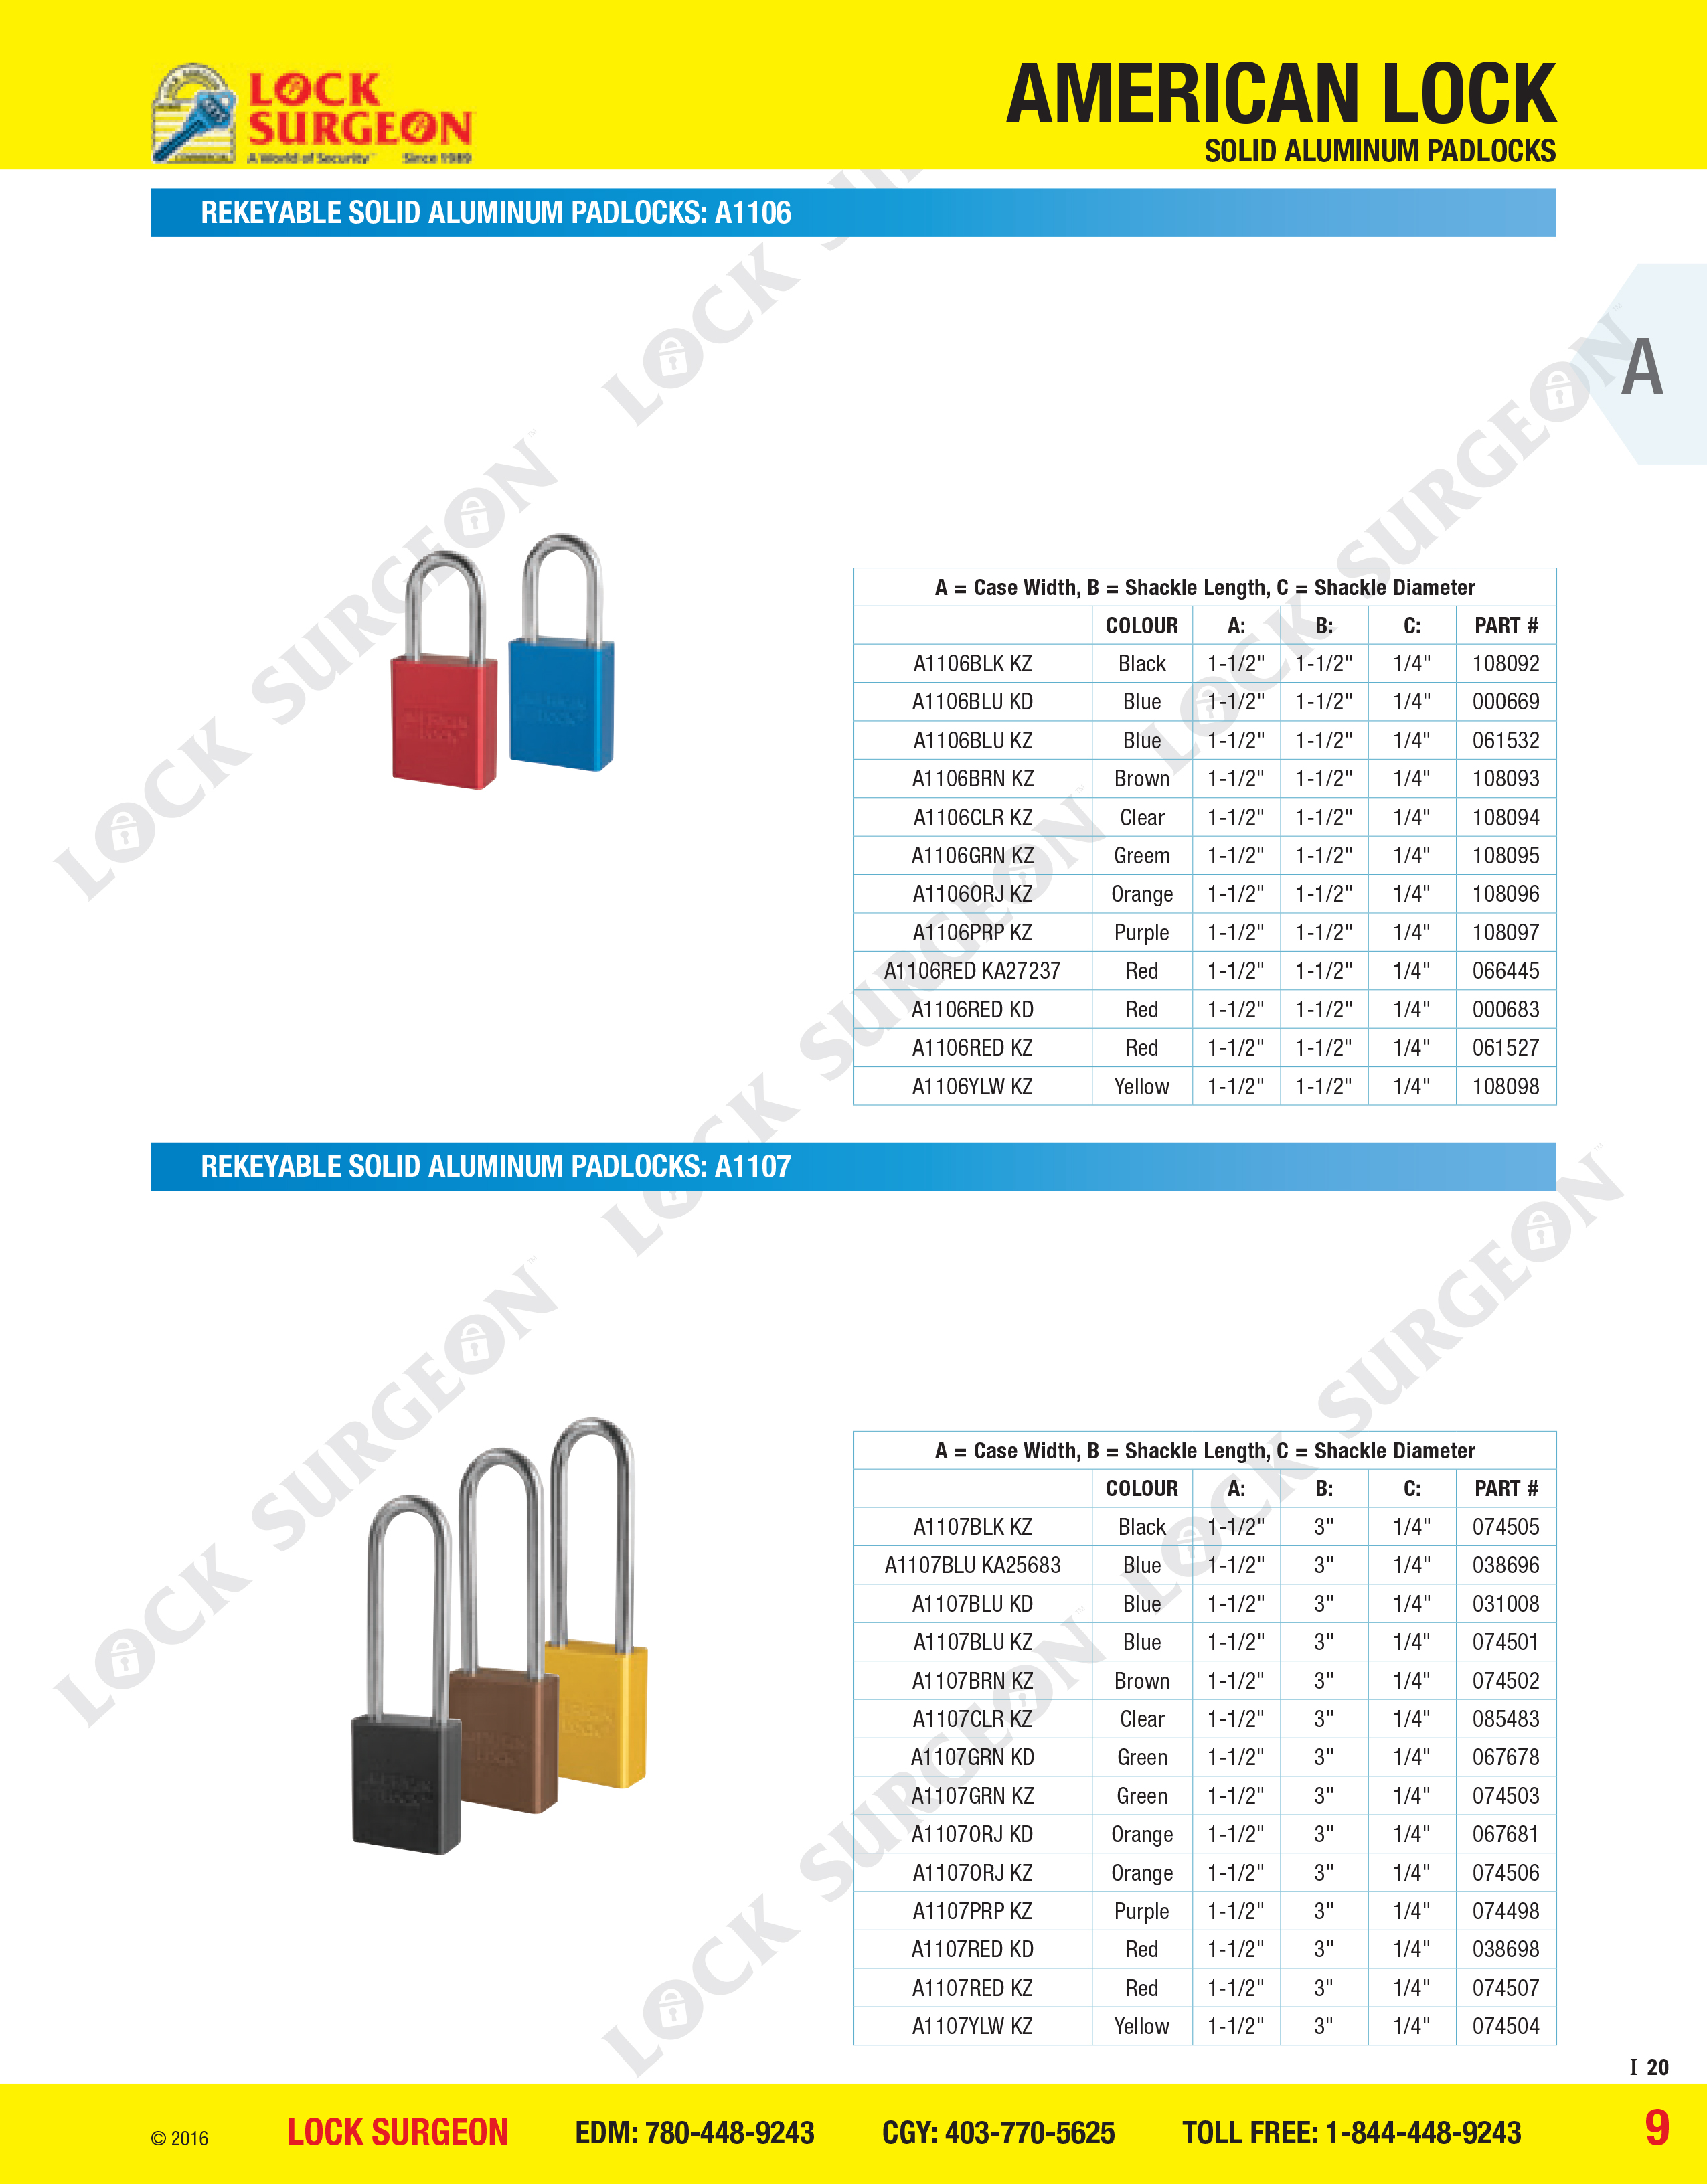 Acheson American Lock Rekeyable solid aluminium padlocks A1106 or A1107 series.